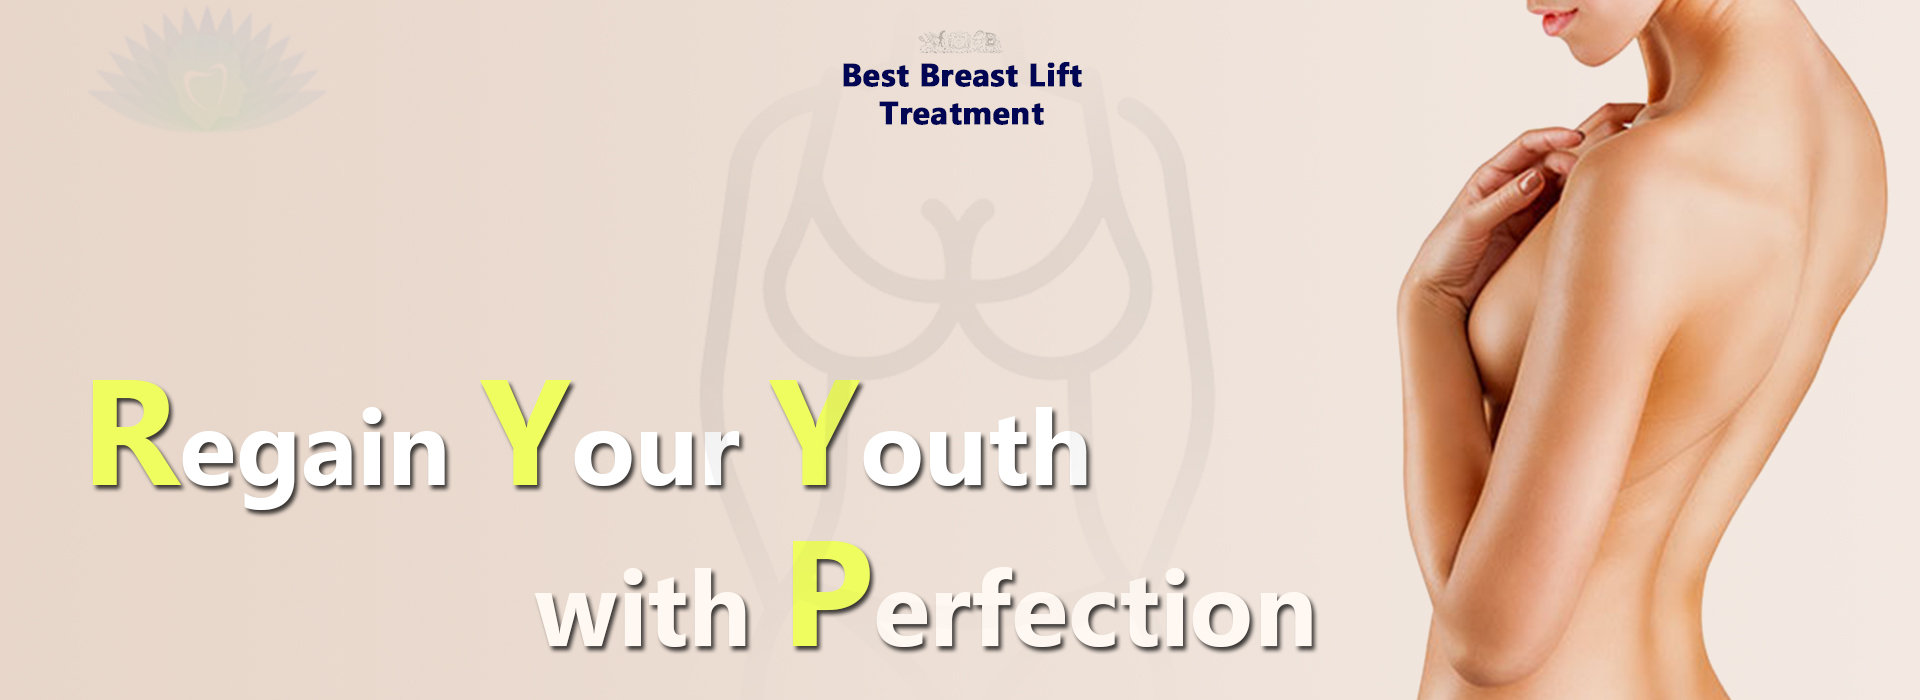 Smaavins best Breast care, breast lift, sagging breast, breast augumentation hospital in chennai, kk nagar, ashok nagar, anna nagar, virugambakkam, vadapalani